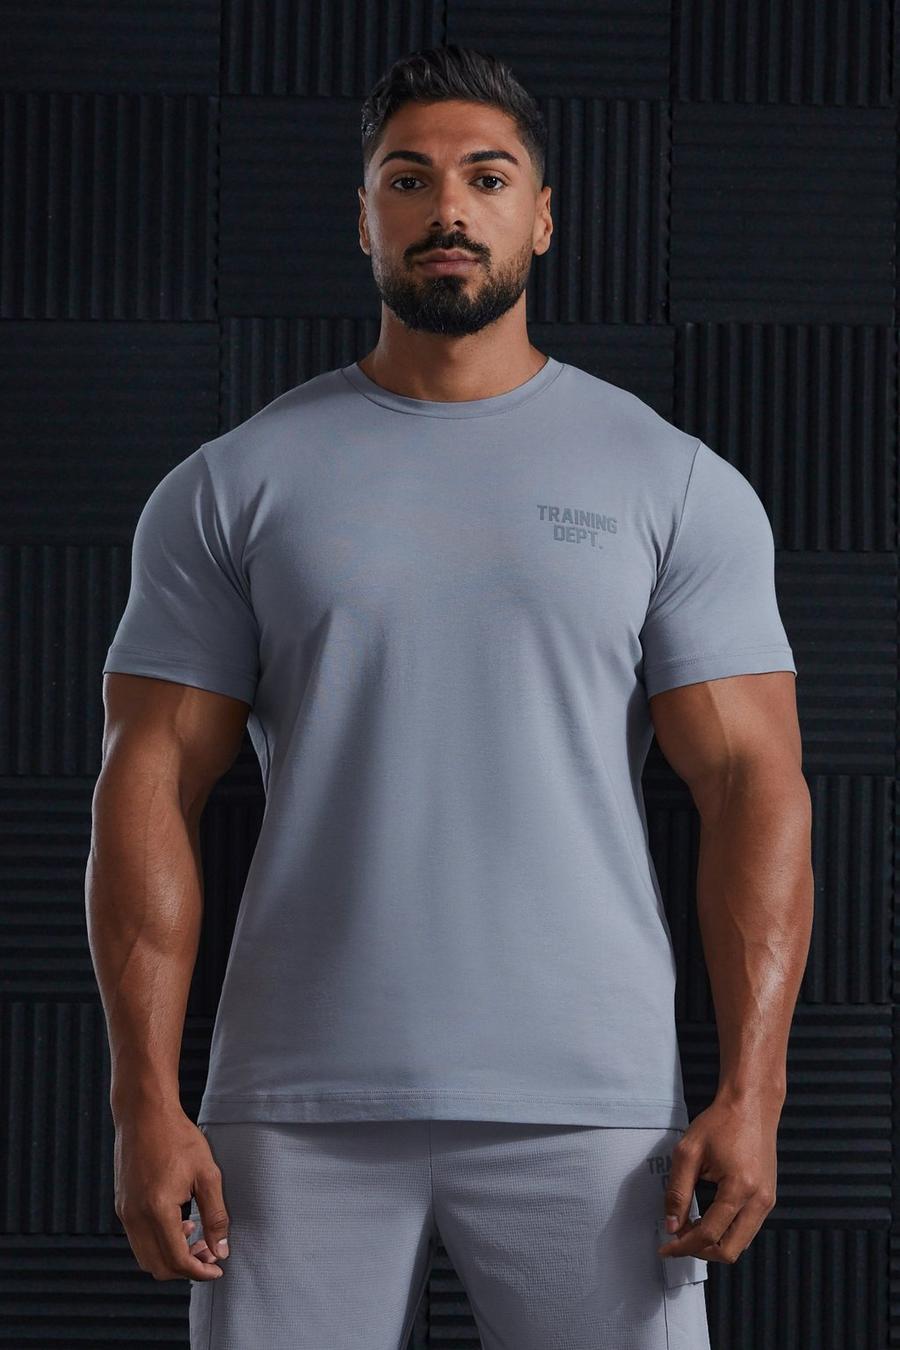 Active Training Dept Performance T-Shirt, Light grey image number 1